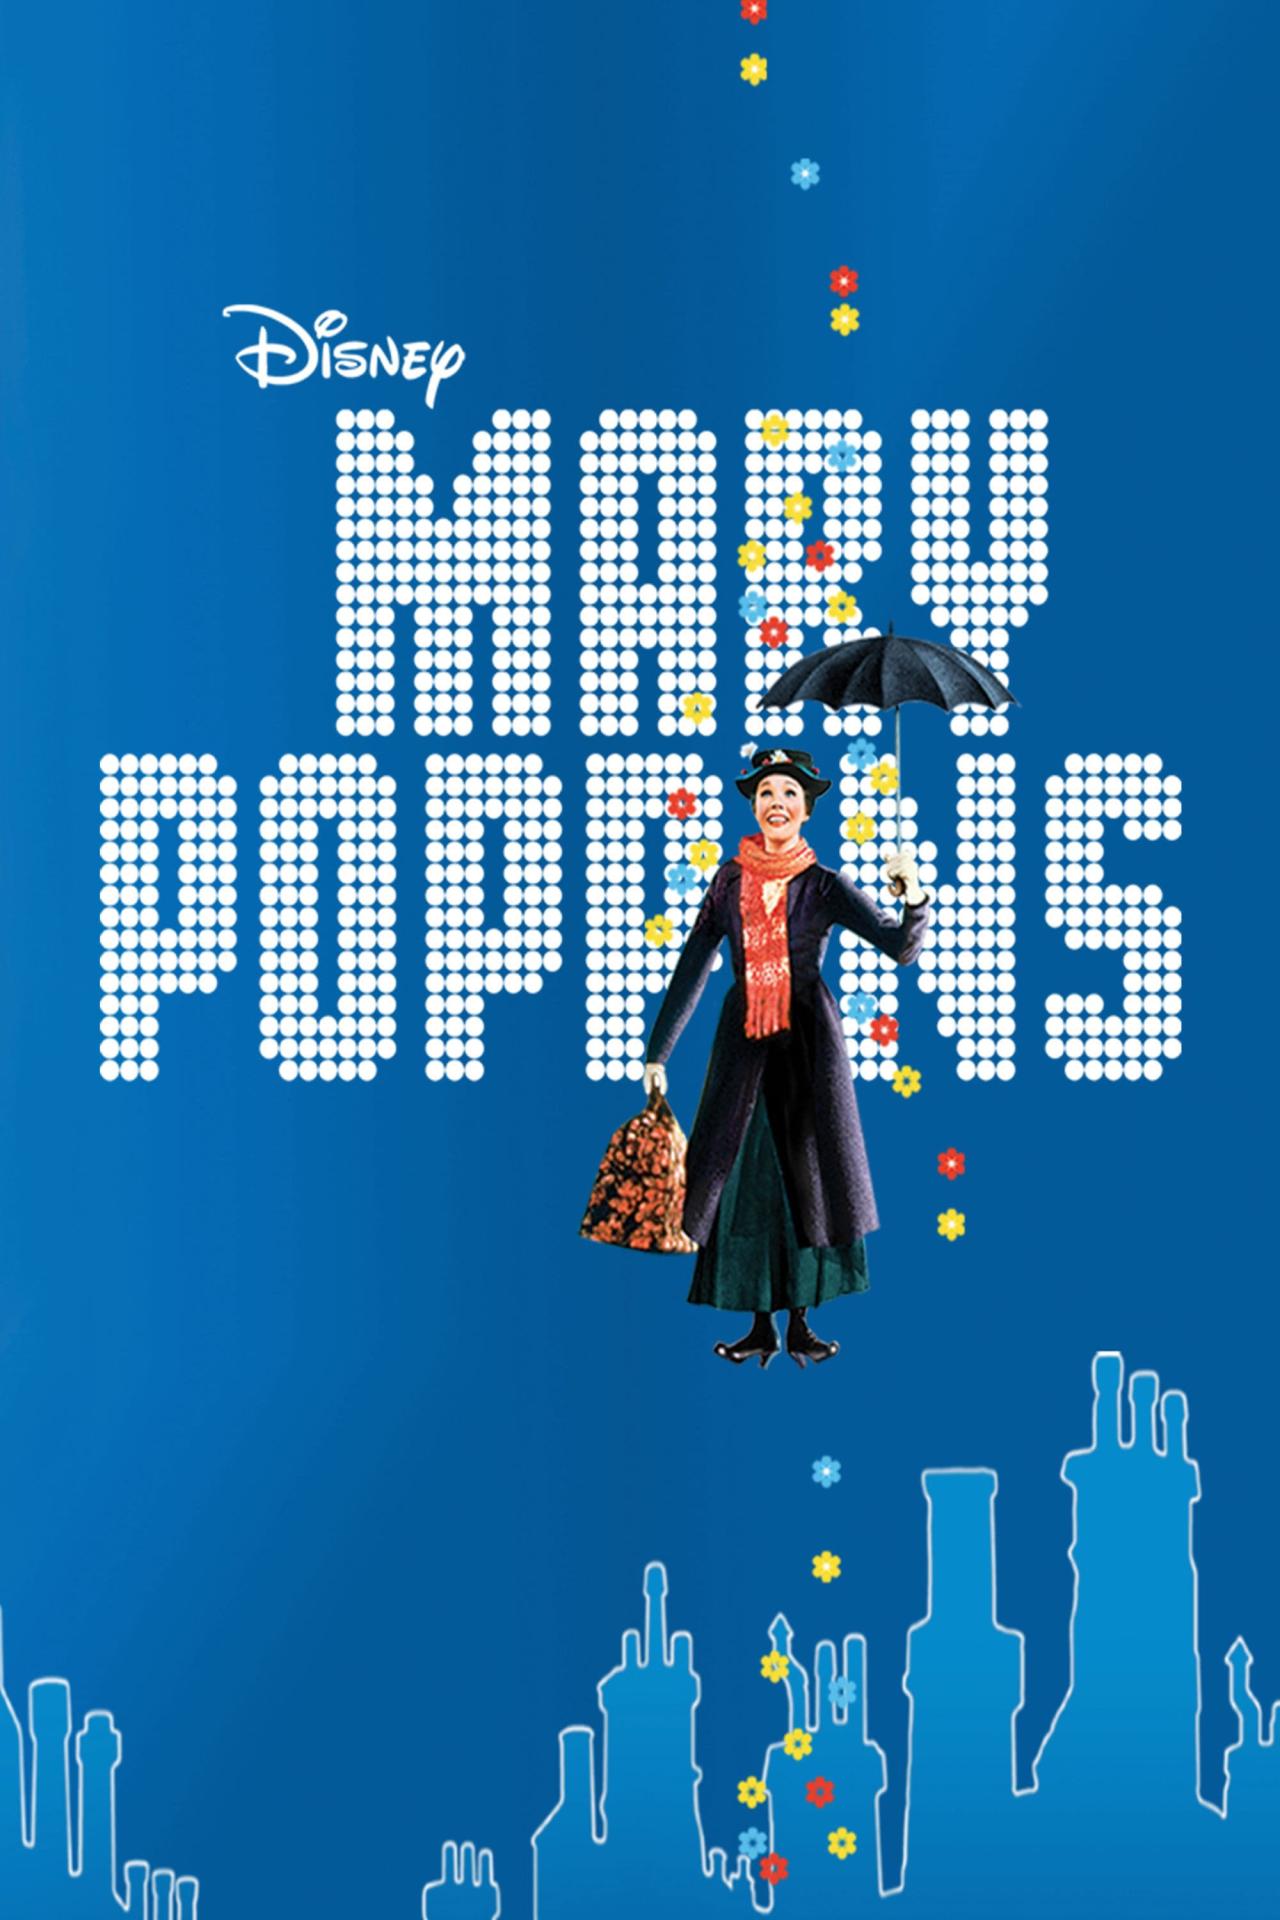 Affiche du film Mary Poppins